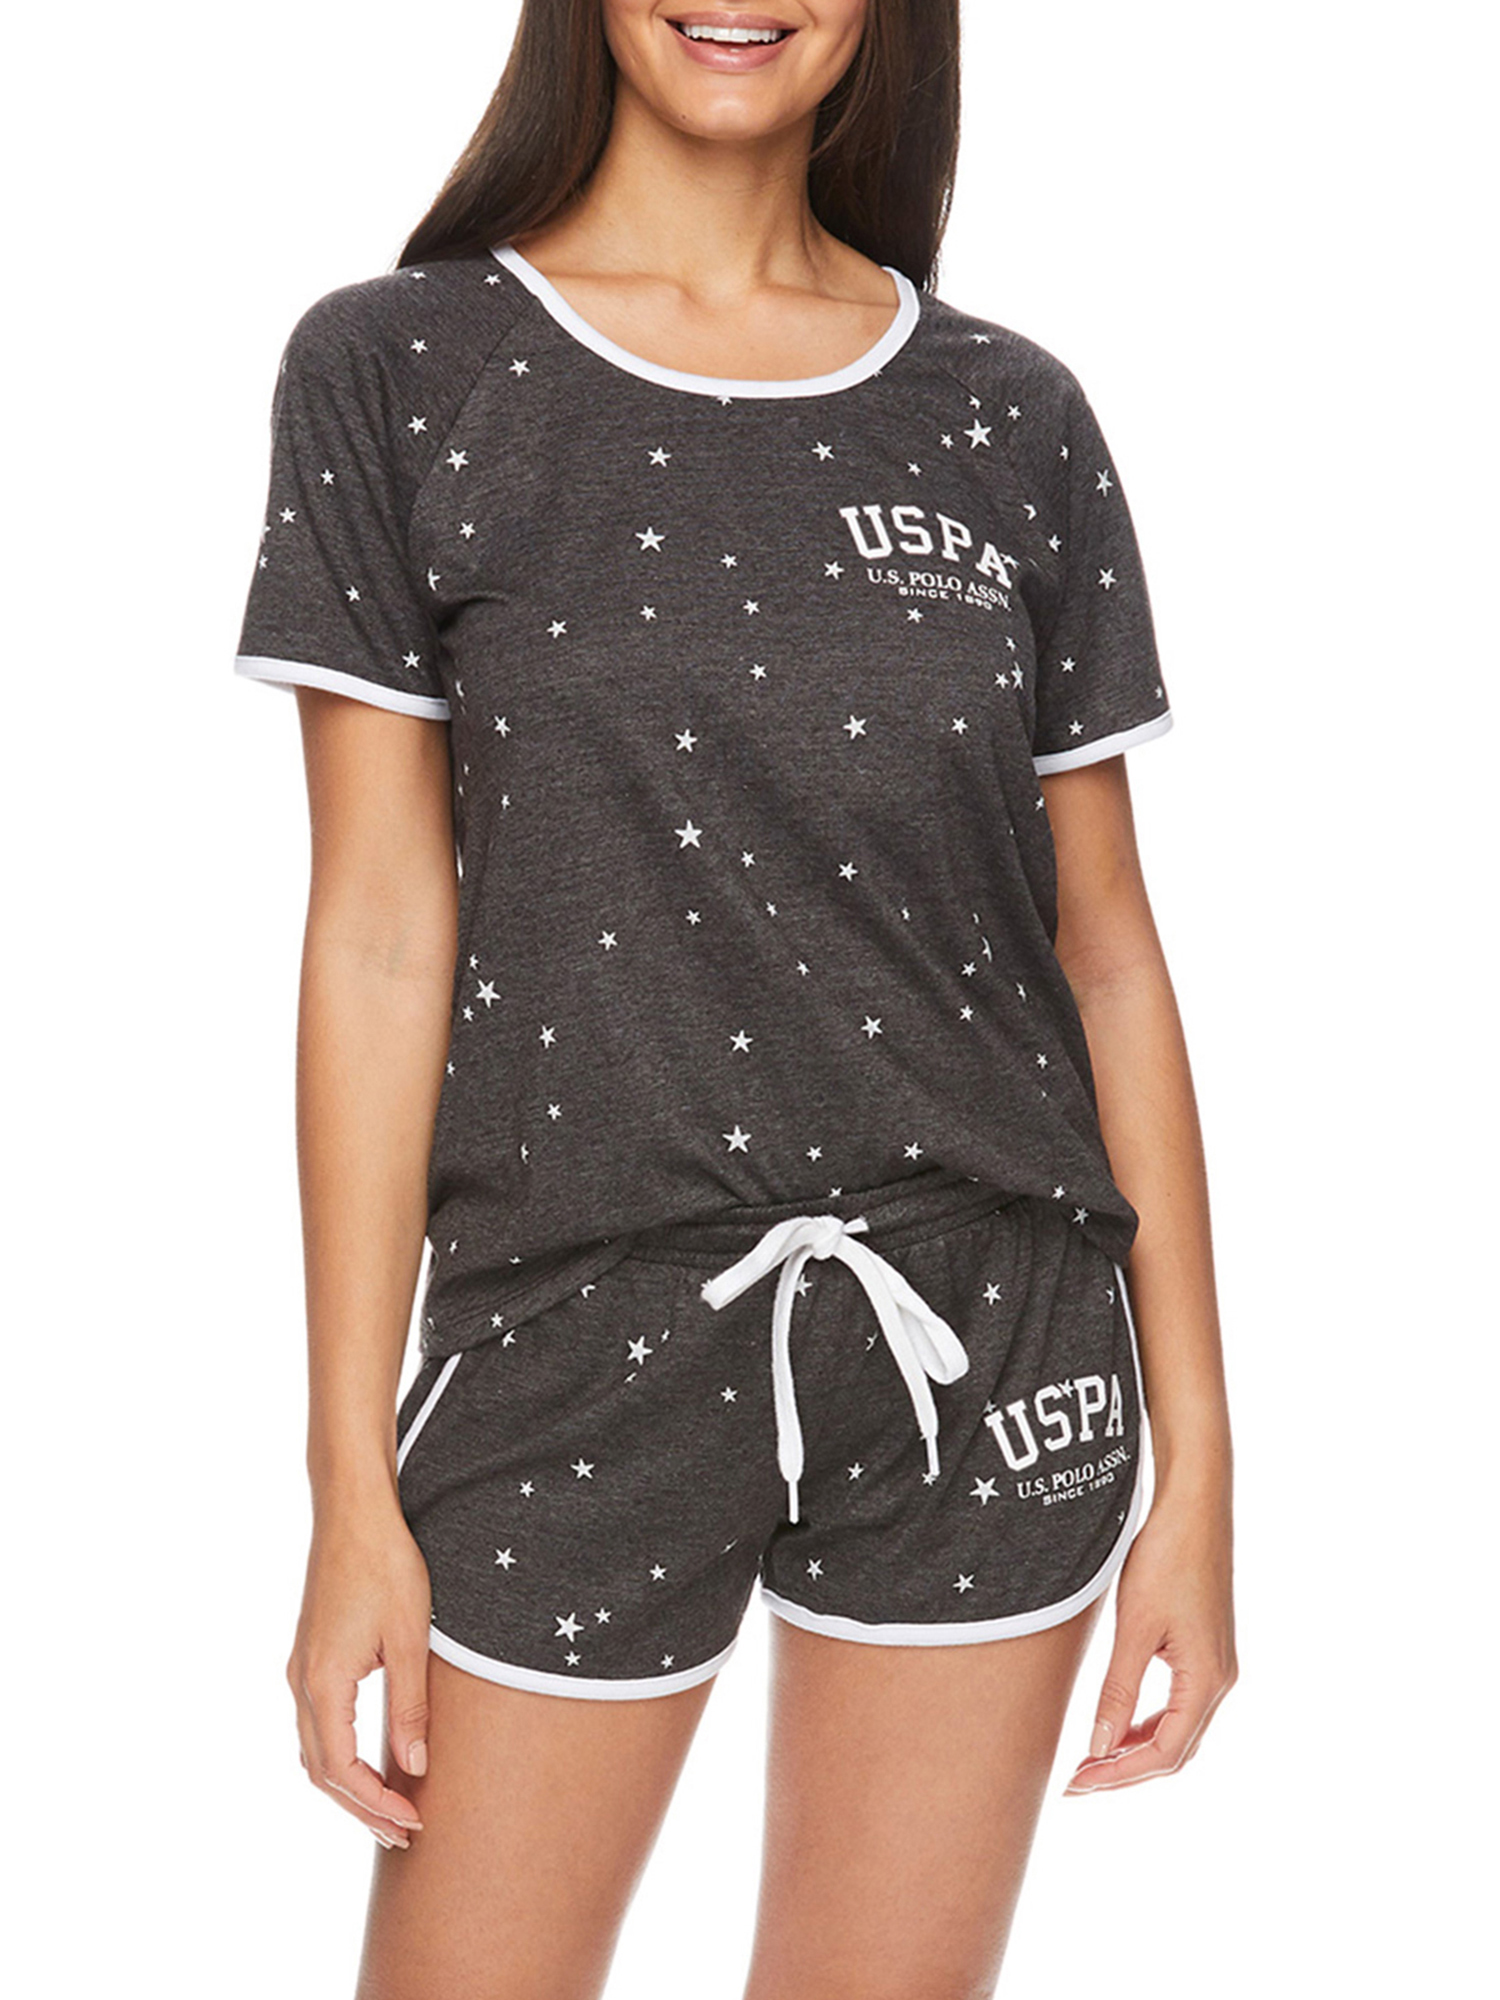 U.S. Polo Assn. Women's 2pc Short Sleeve Scoop-Neck Top and Shorts Lounge Pajama Sleep Set - image 1 of 5